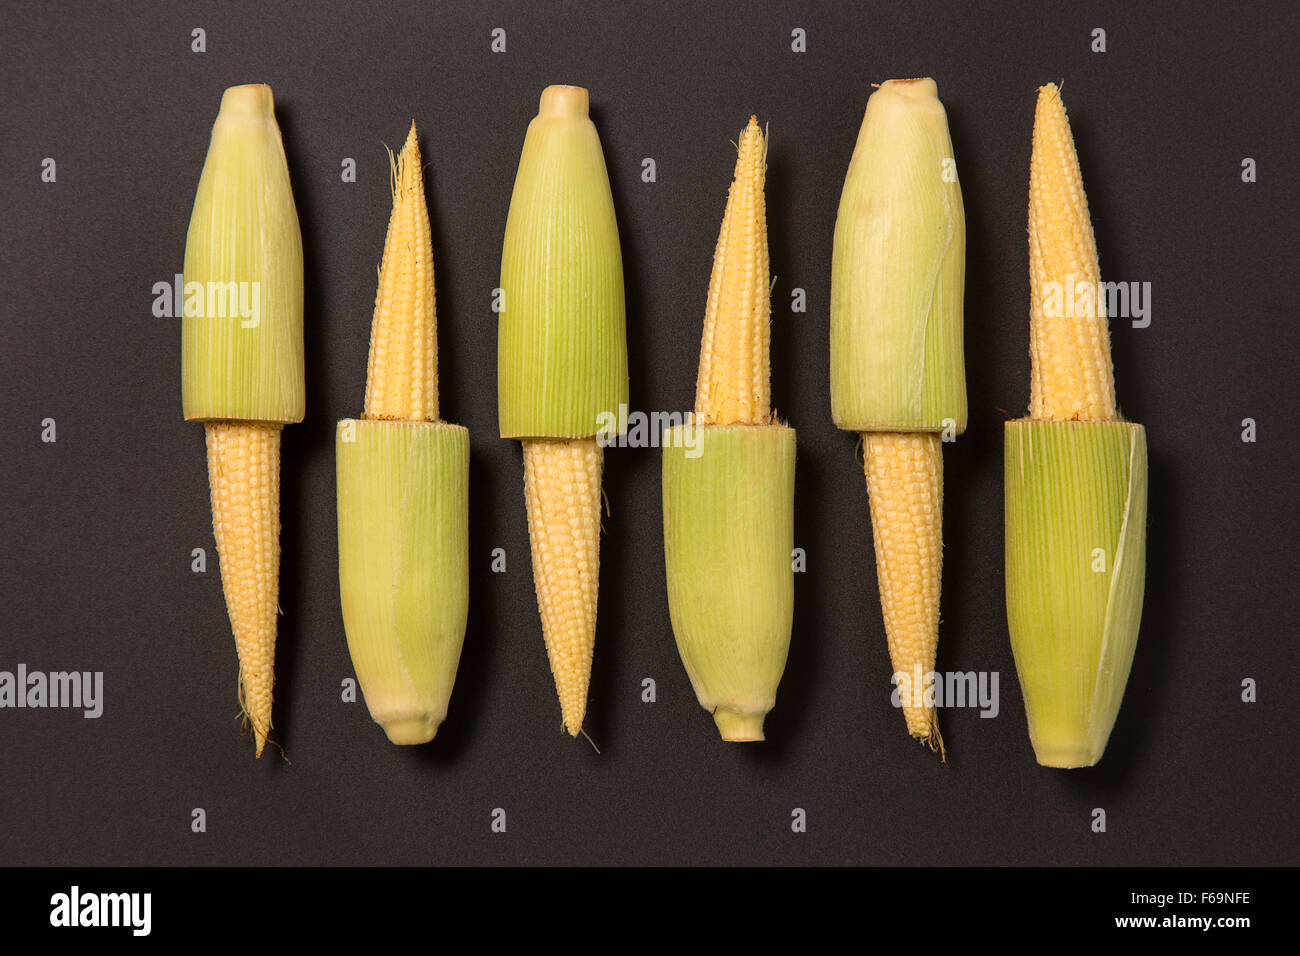 Raw of fresh baby corns, studio shot on black background Stock Photo